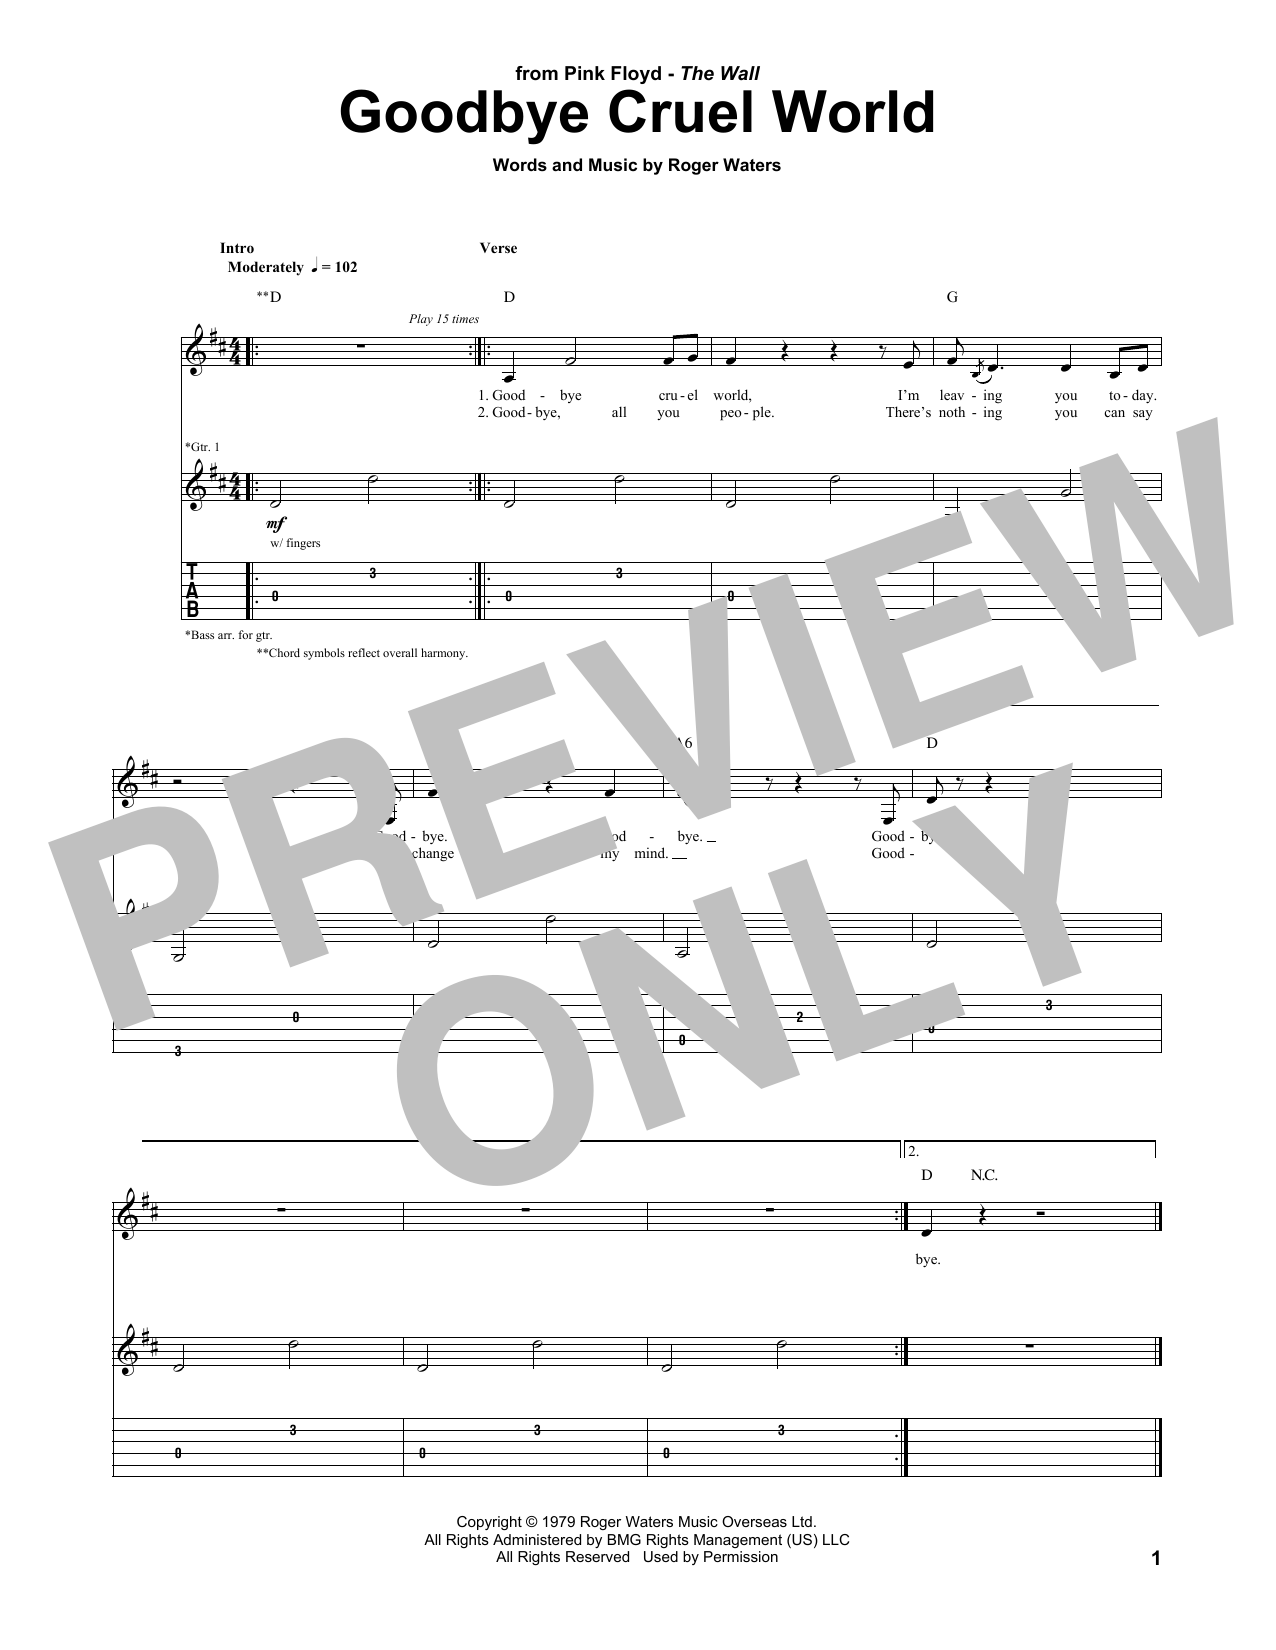 Pink Floyd Goodbye Cruel World Sheet Music Notes & Chords for Guitar Tab - Download or Print PDF